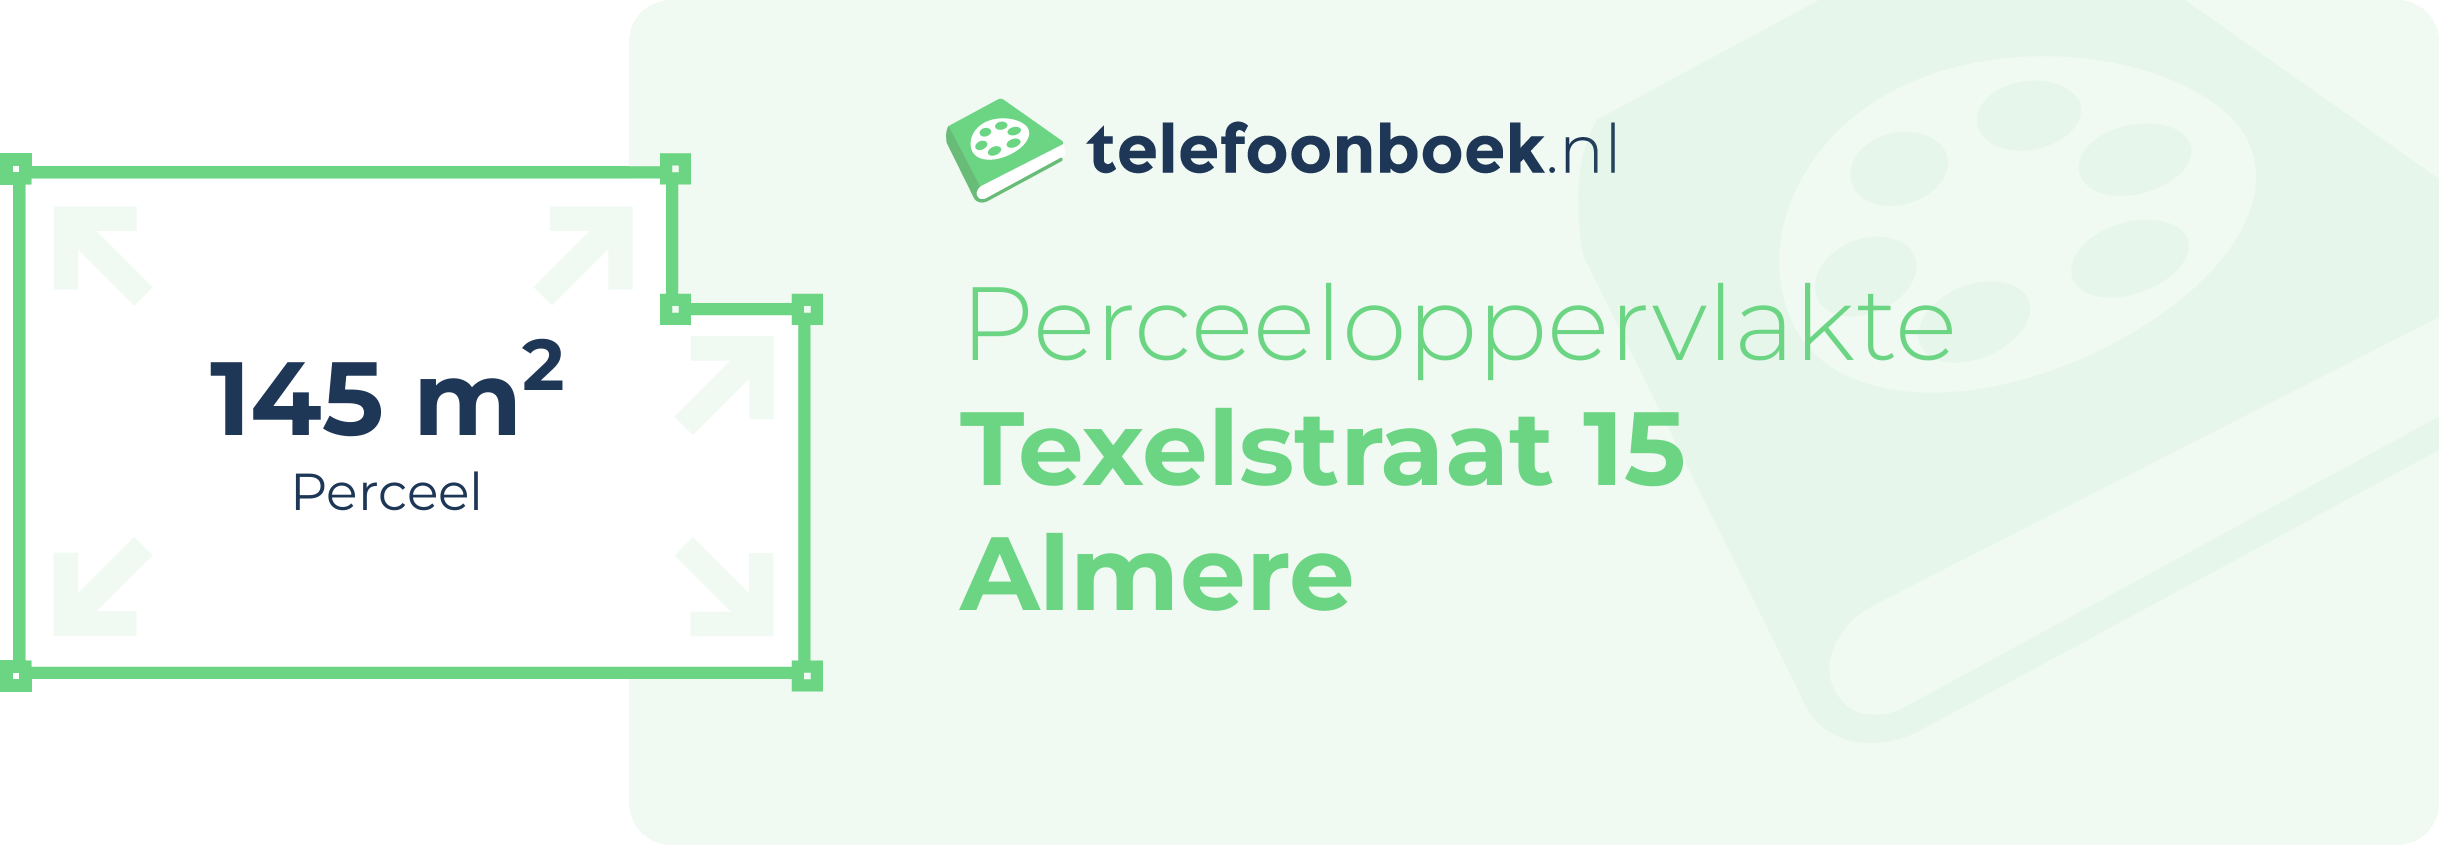 Perceeloppervlakte Texelstraat 15 Almere